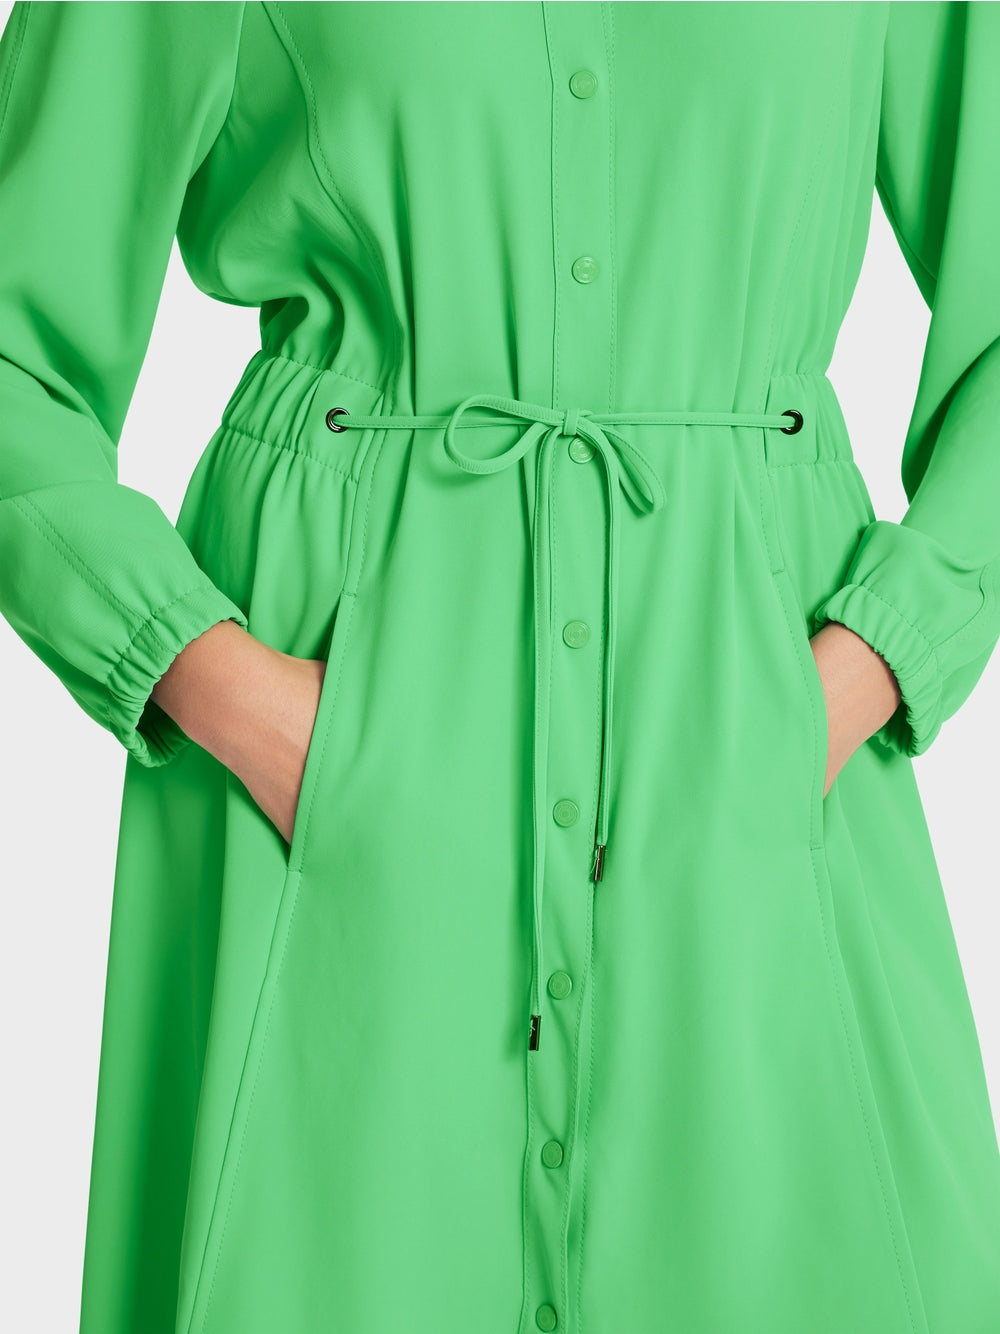 Marc Cain New Neon Green Shirt blouse dress with raglan